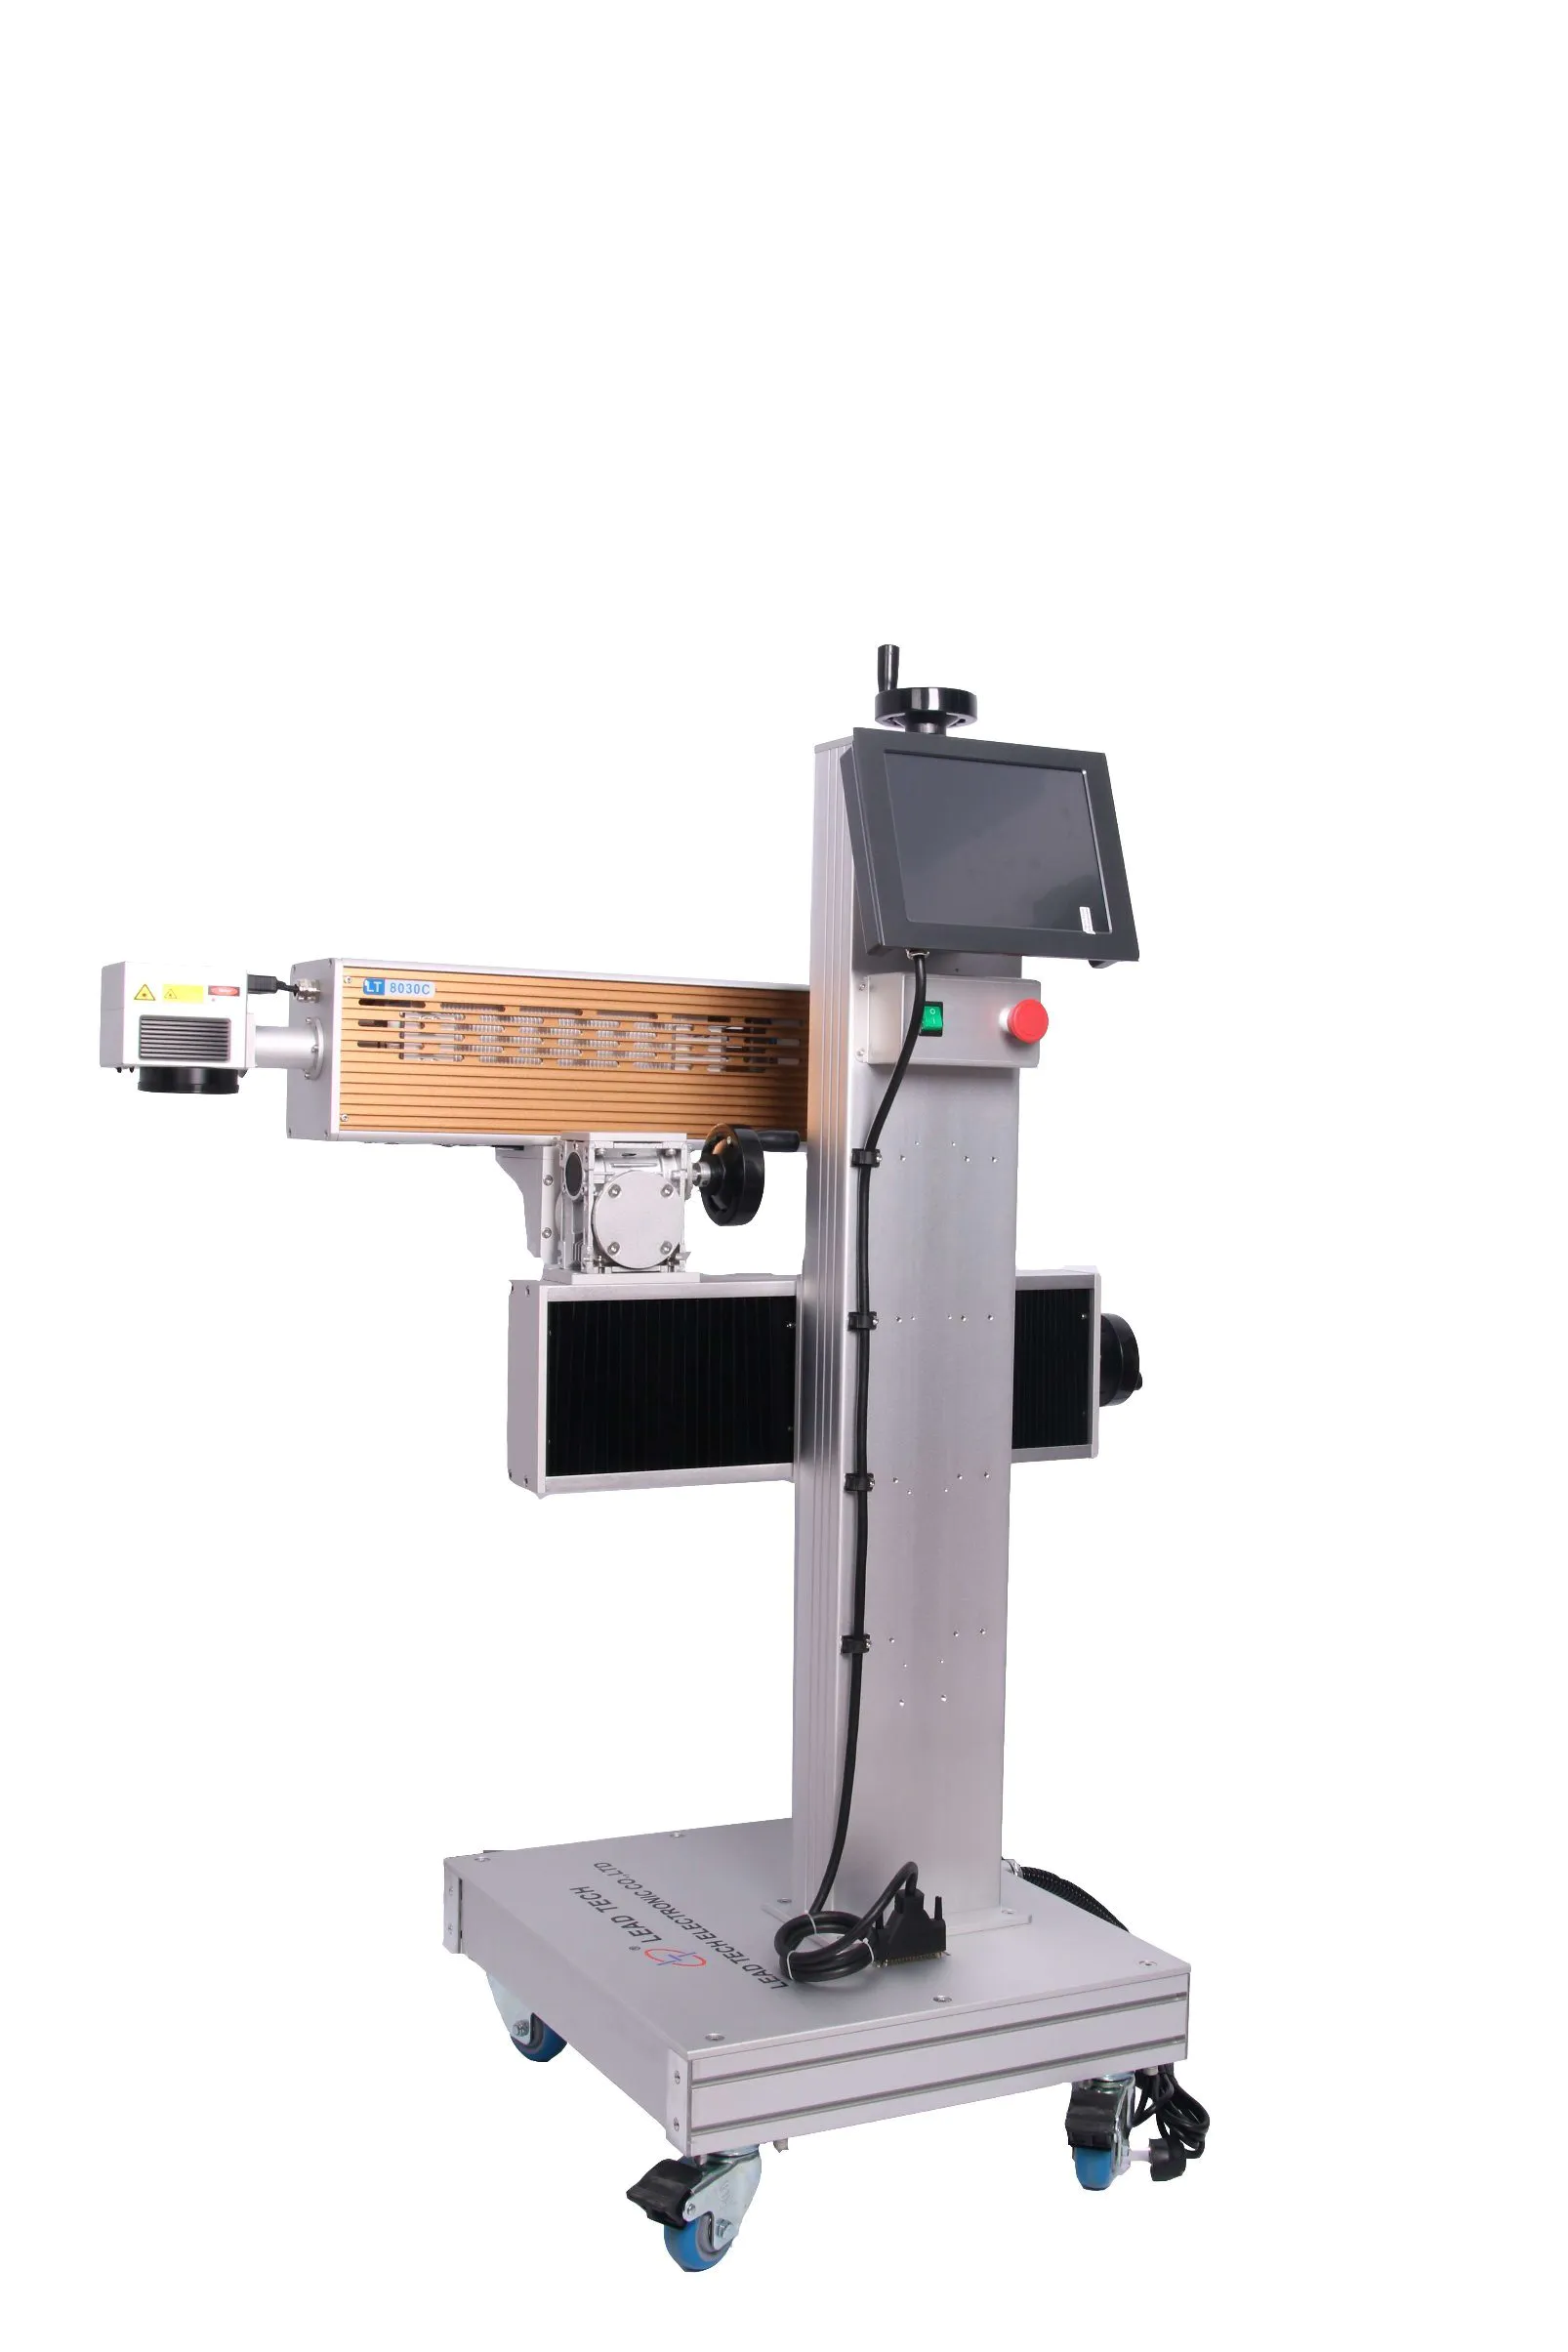 Lt8020c/Lt8030c CO2 Stainless Steel Digital Laser Printer